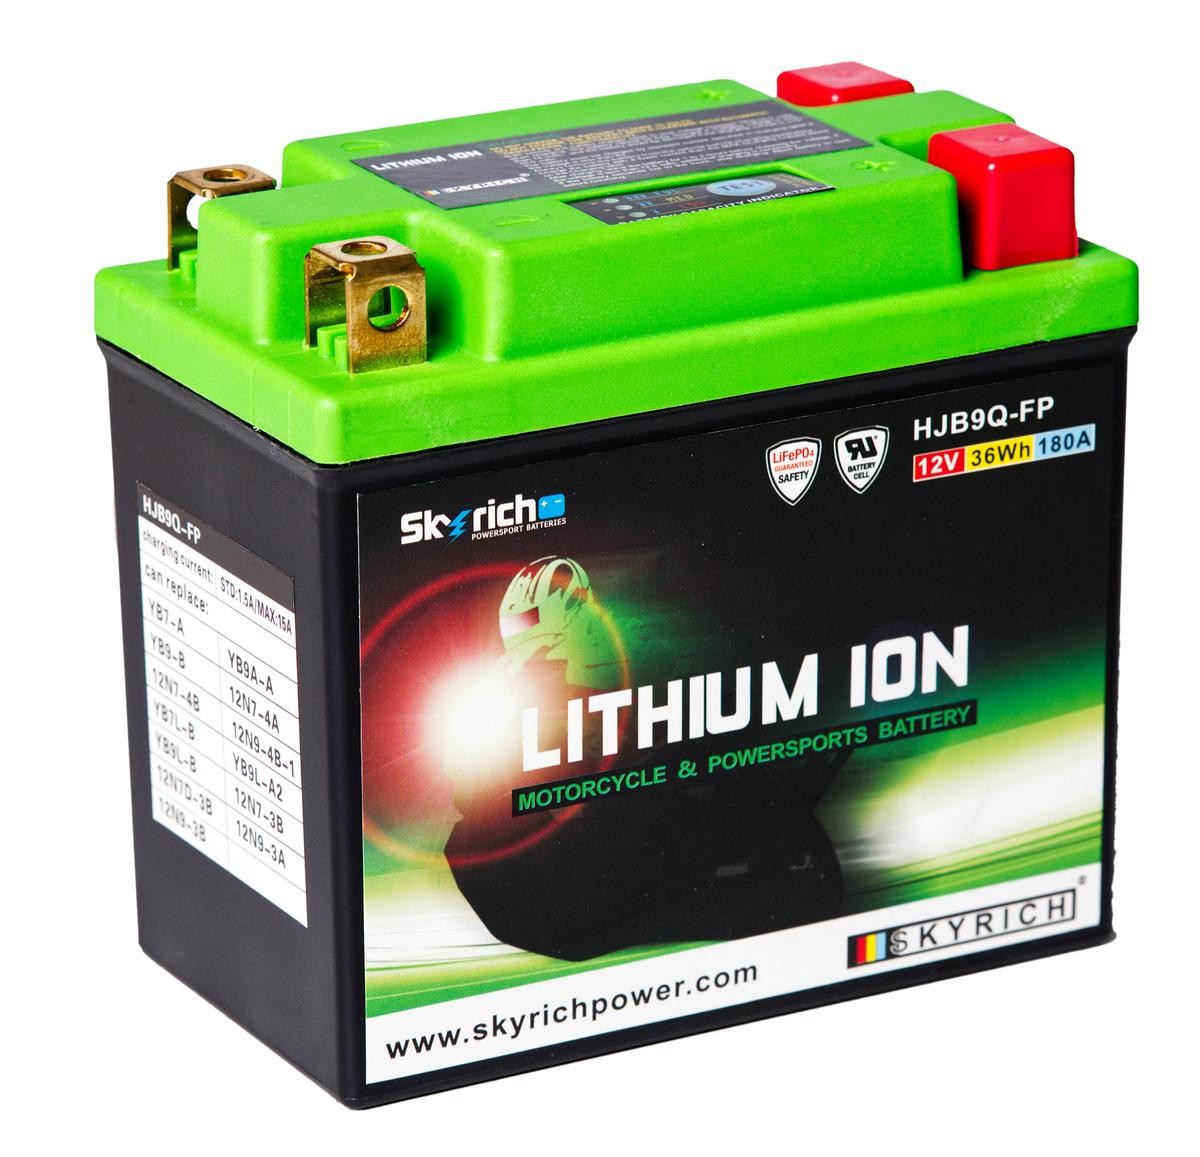 Start stop battery SKYRICH LITHIUM ION 12V 3Ah 180A N Li-Ion Battery - HJB9Q-FP